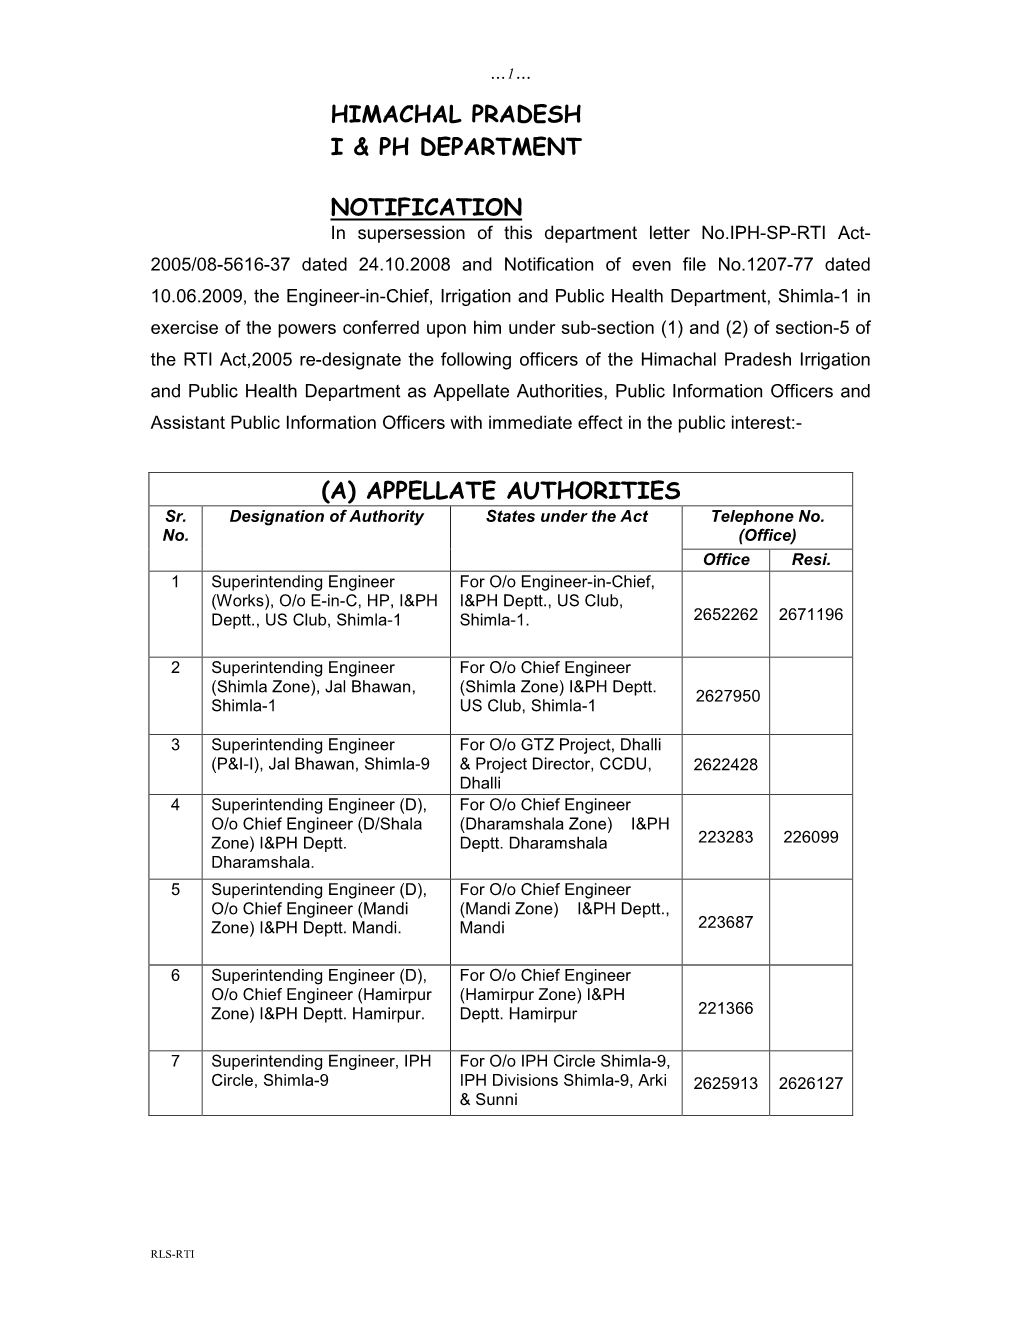 Himachal Pradesh I & Ph Department Notification